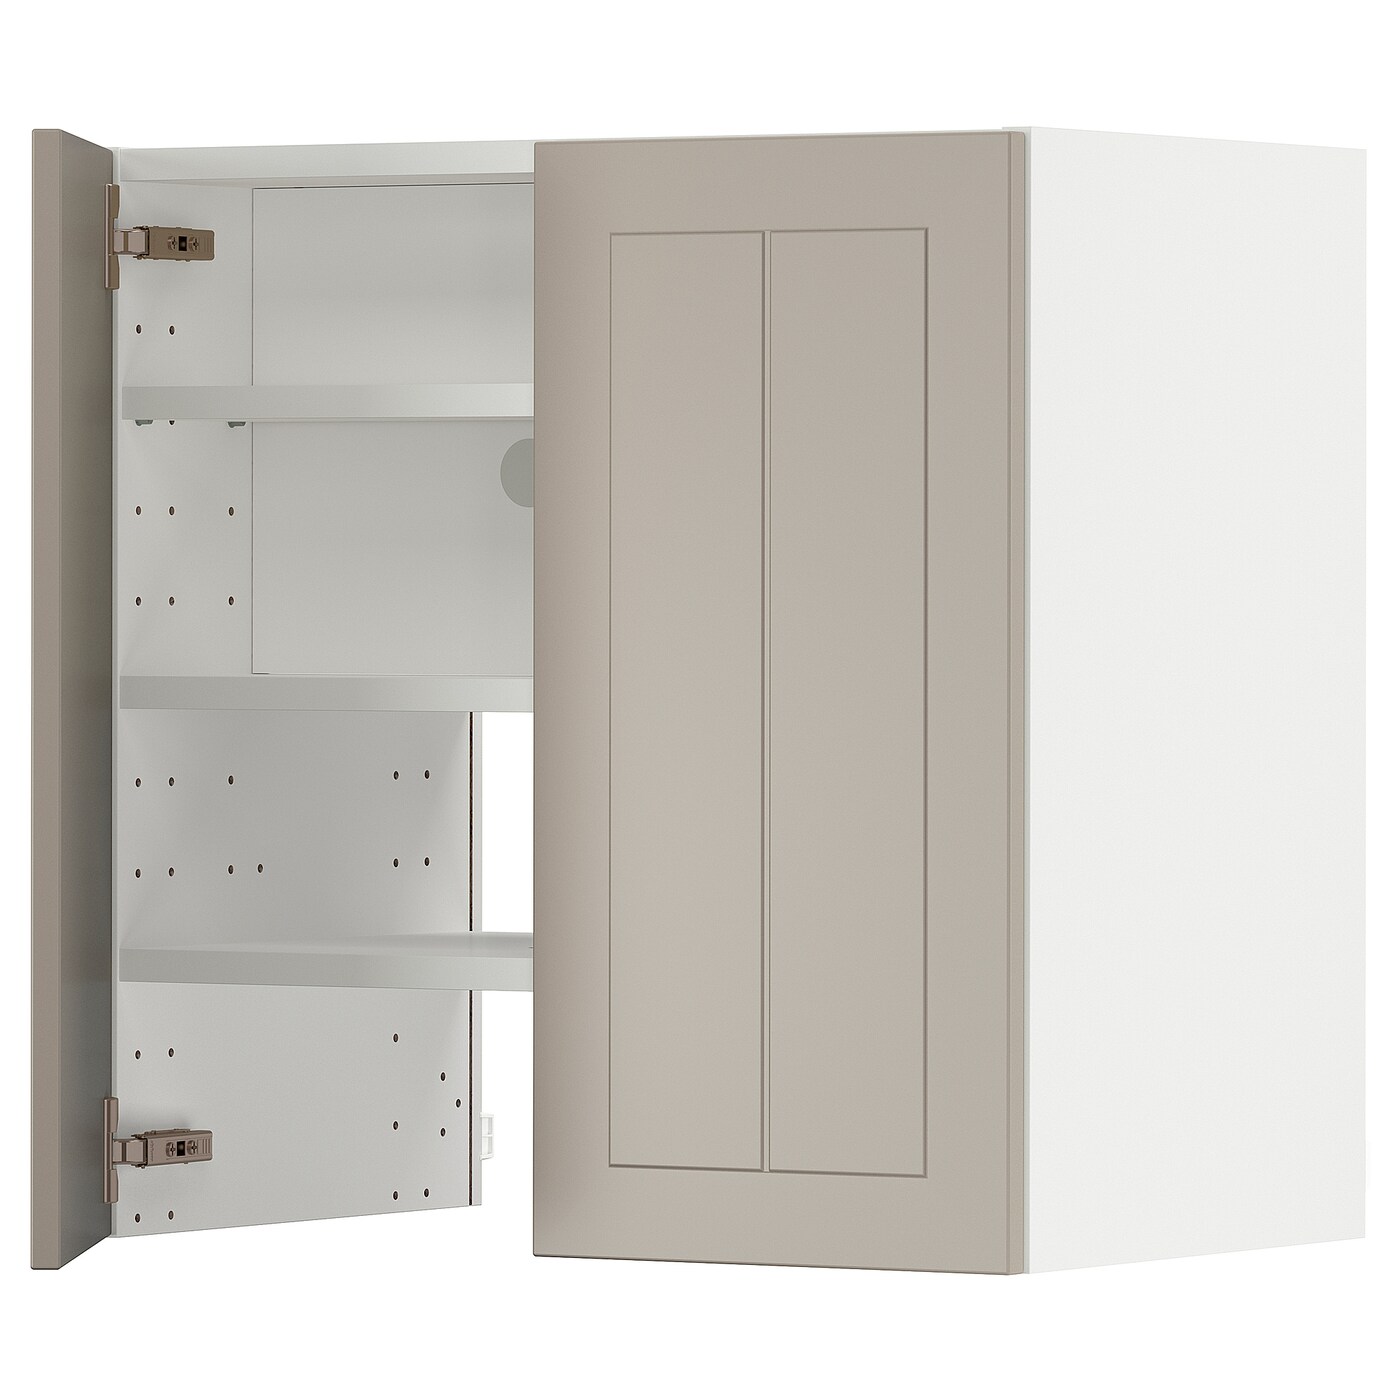 Навесной шкаф - METOD IKEA/ МЕТОД ИКЕА, 60х60 см, белый/светло-коричневый